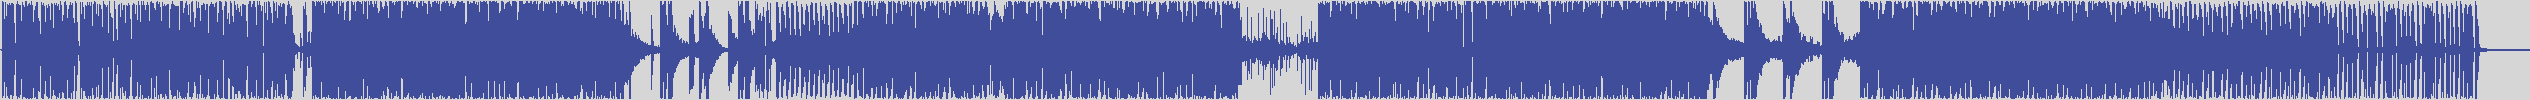 upr [UPR029] Alek Drive - Abyss [Original Mix] audio wave form